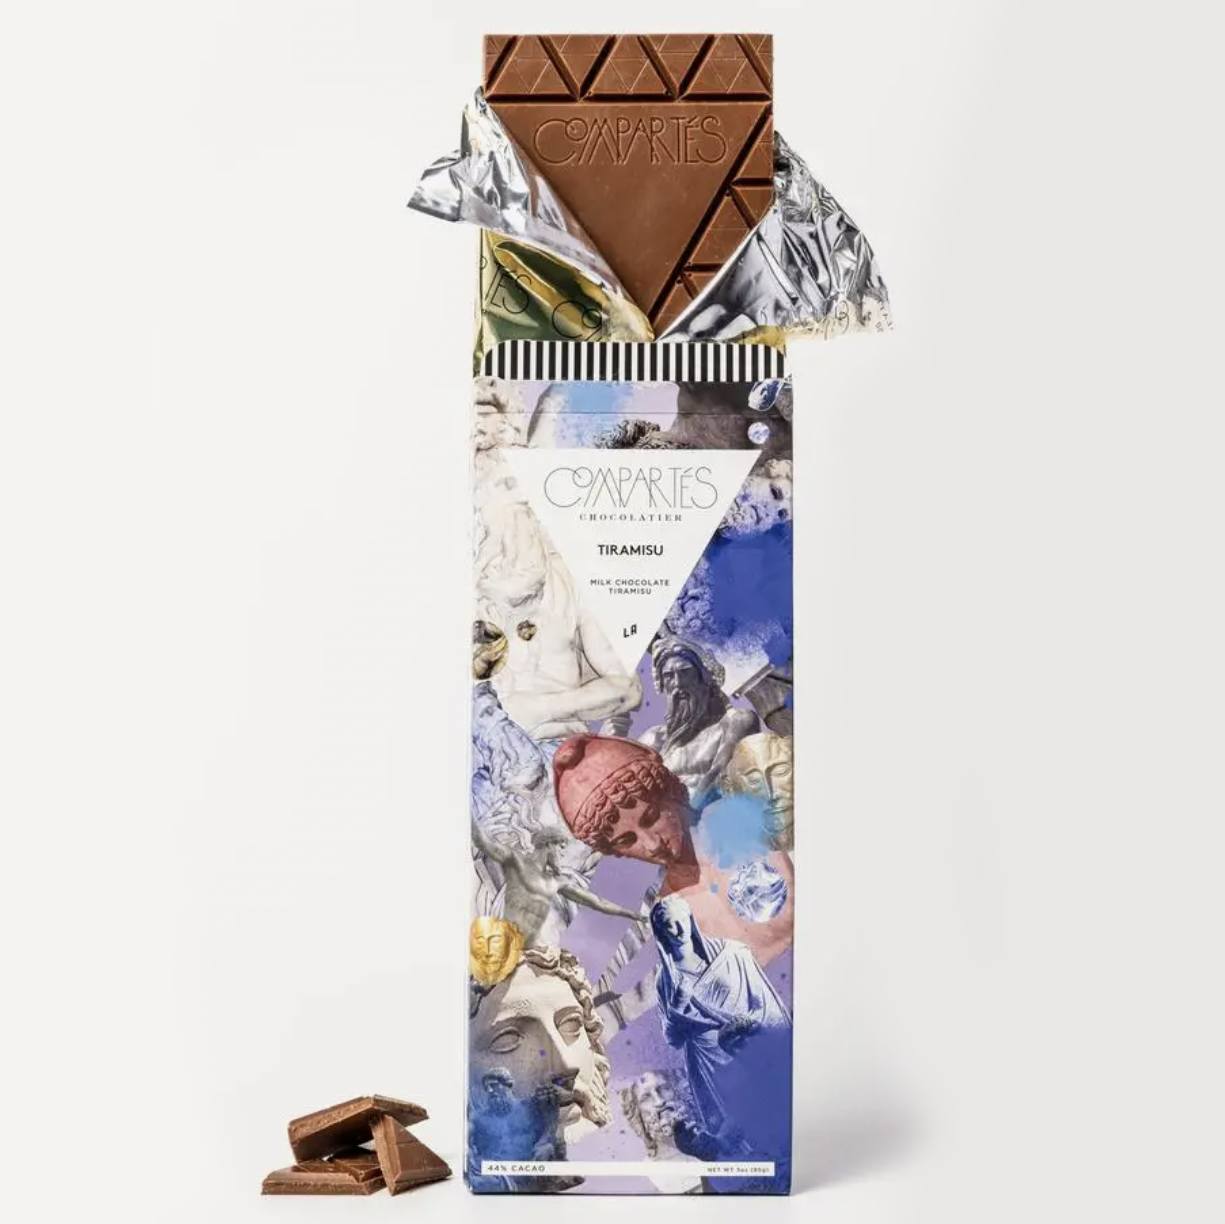 Compartés Chocolate Tiramisu Chocolate Bar | Prelude and Dawn| Los Angeles, CA